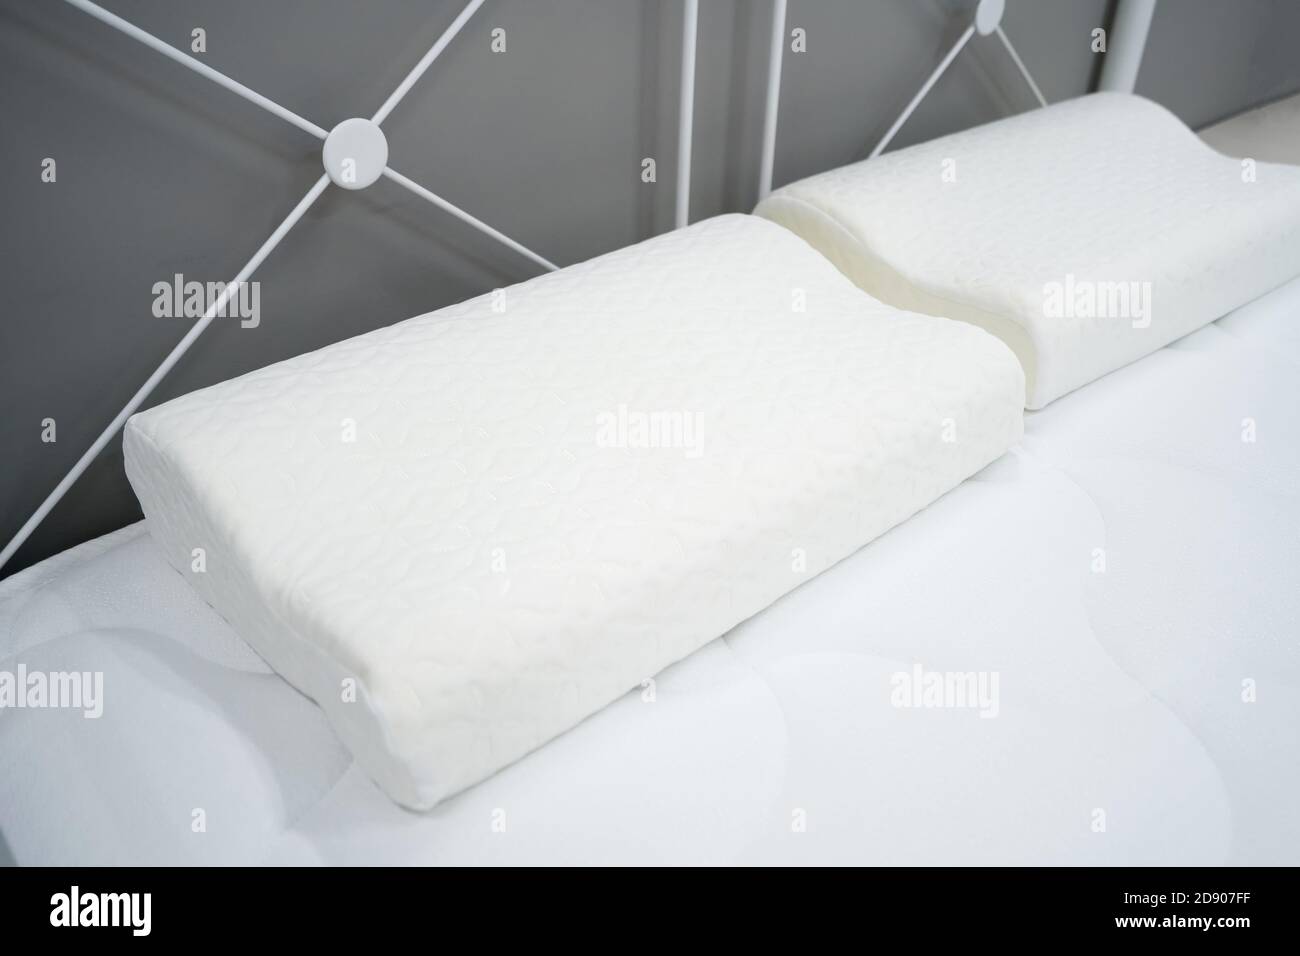 Orthopedic pillows for healthy sleep on a white mattress Stock Photo